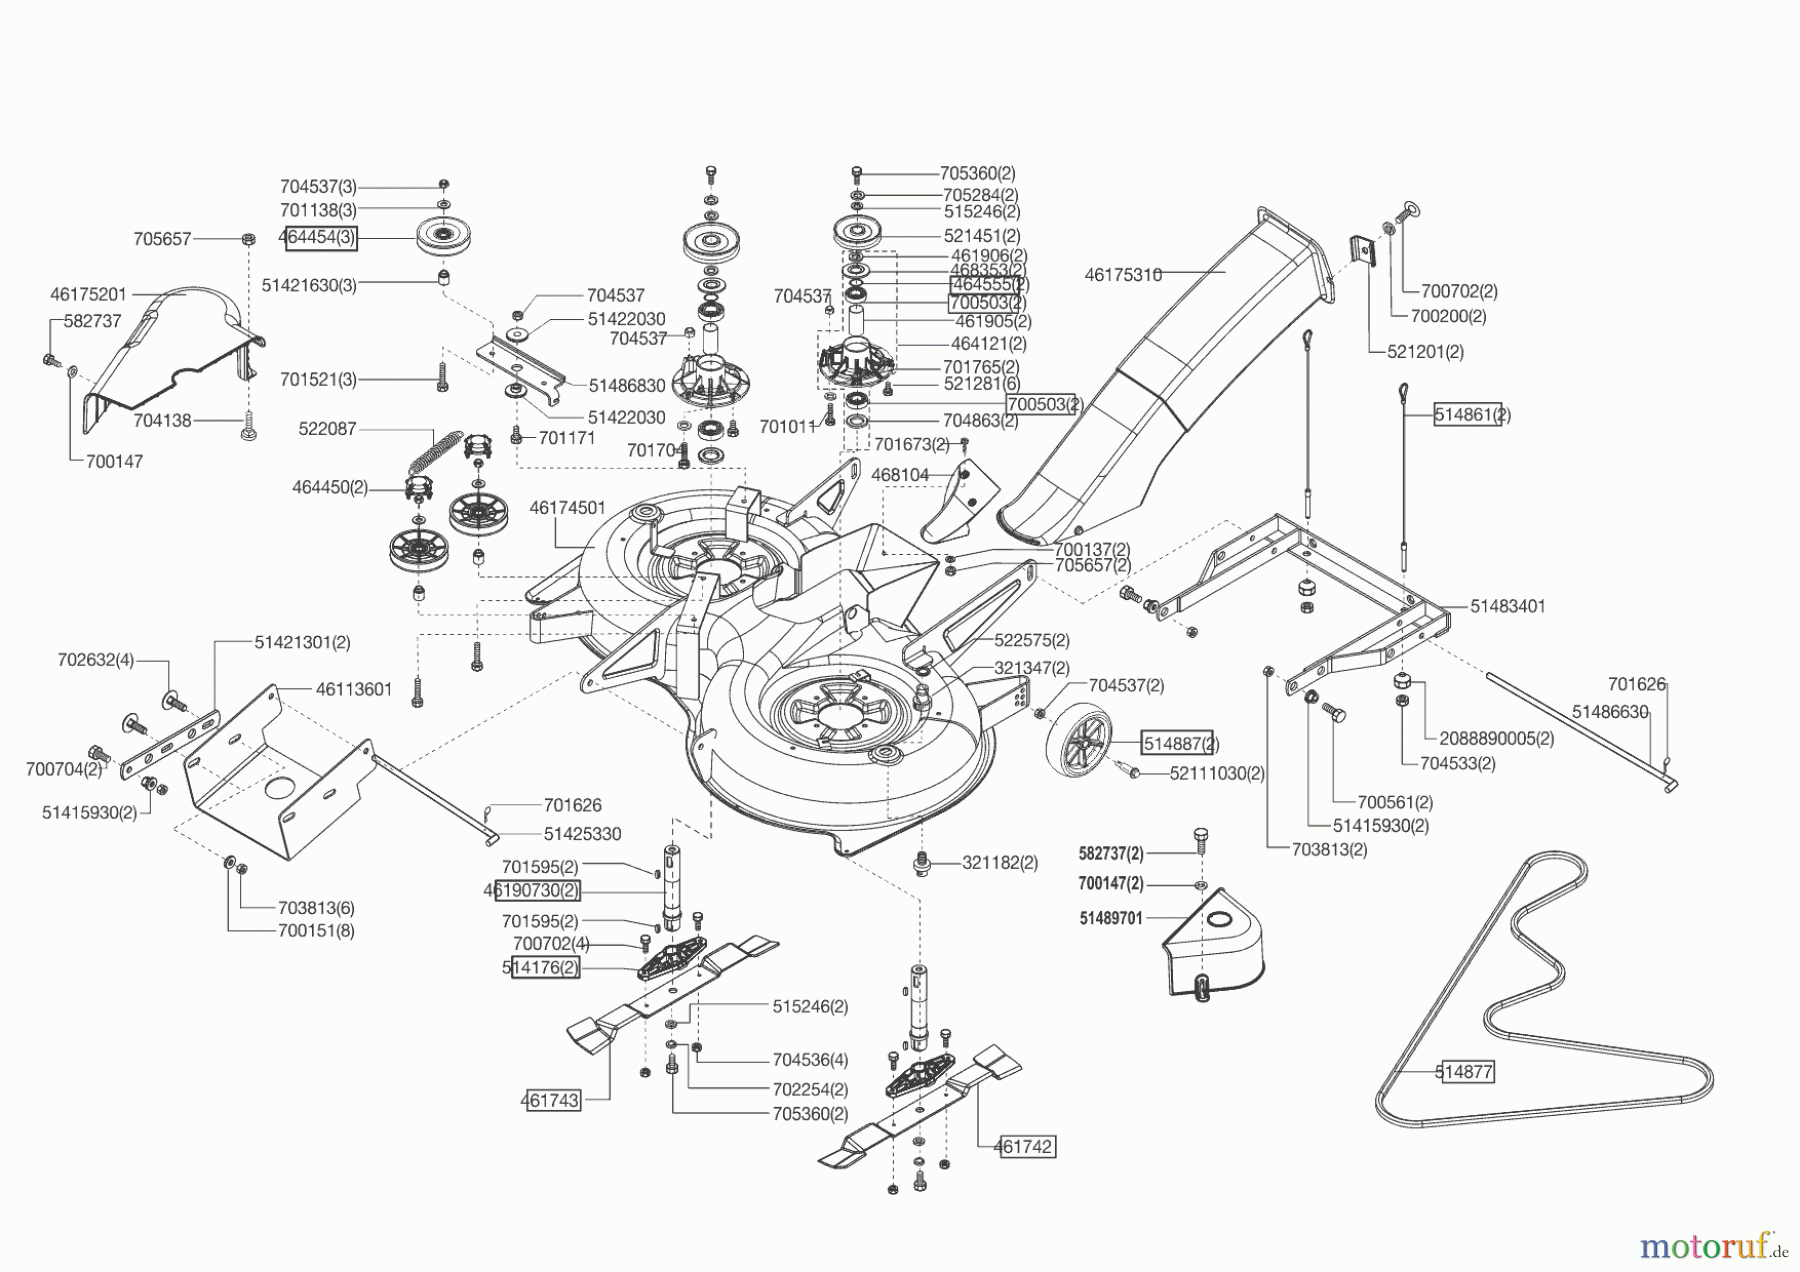  AL-KO Gartentechnik Rasentraktor Comfort T 954 HD-A  ab 03/2015 Seite 5